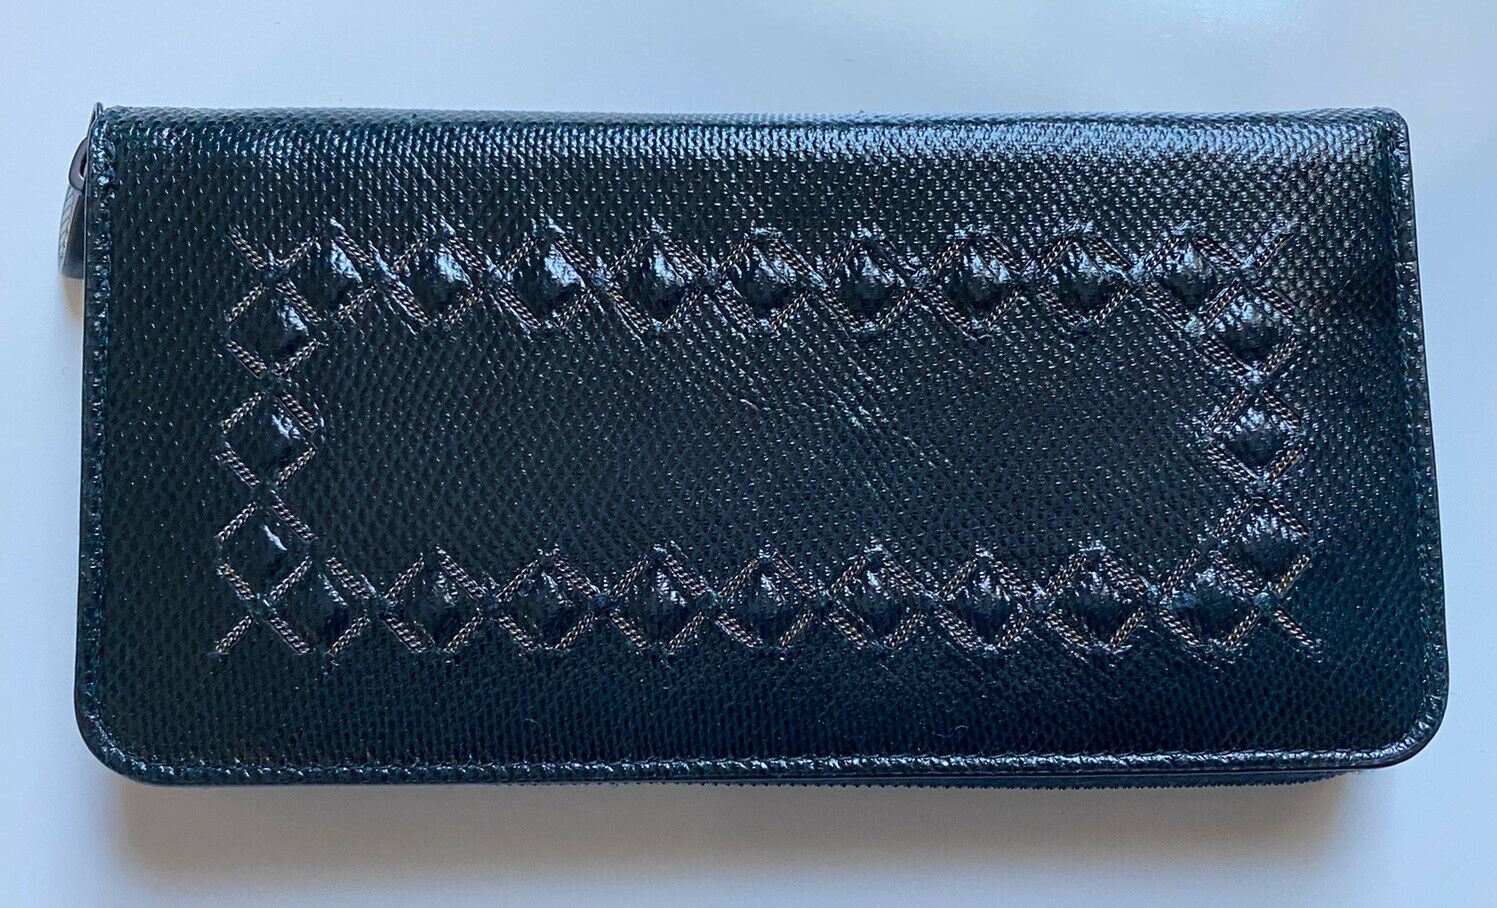 Neu mit Etikett: 980 $ Bottega Veneta Zipper Karung Shiny Leather Brighton Black Wallet 547964 